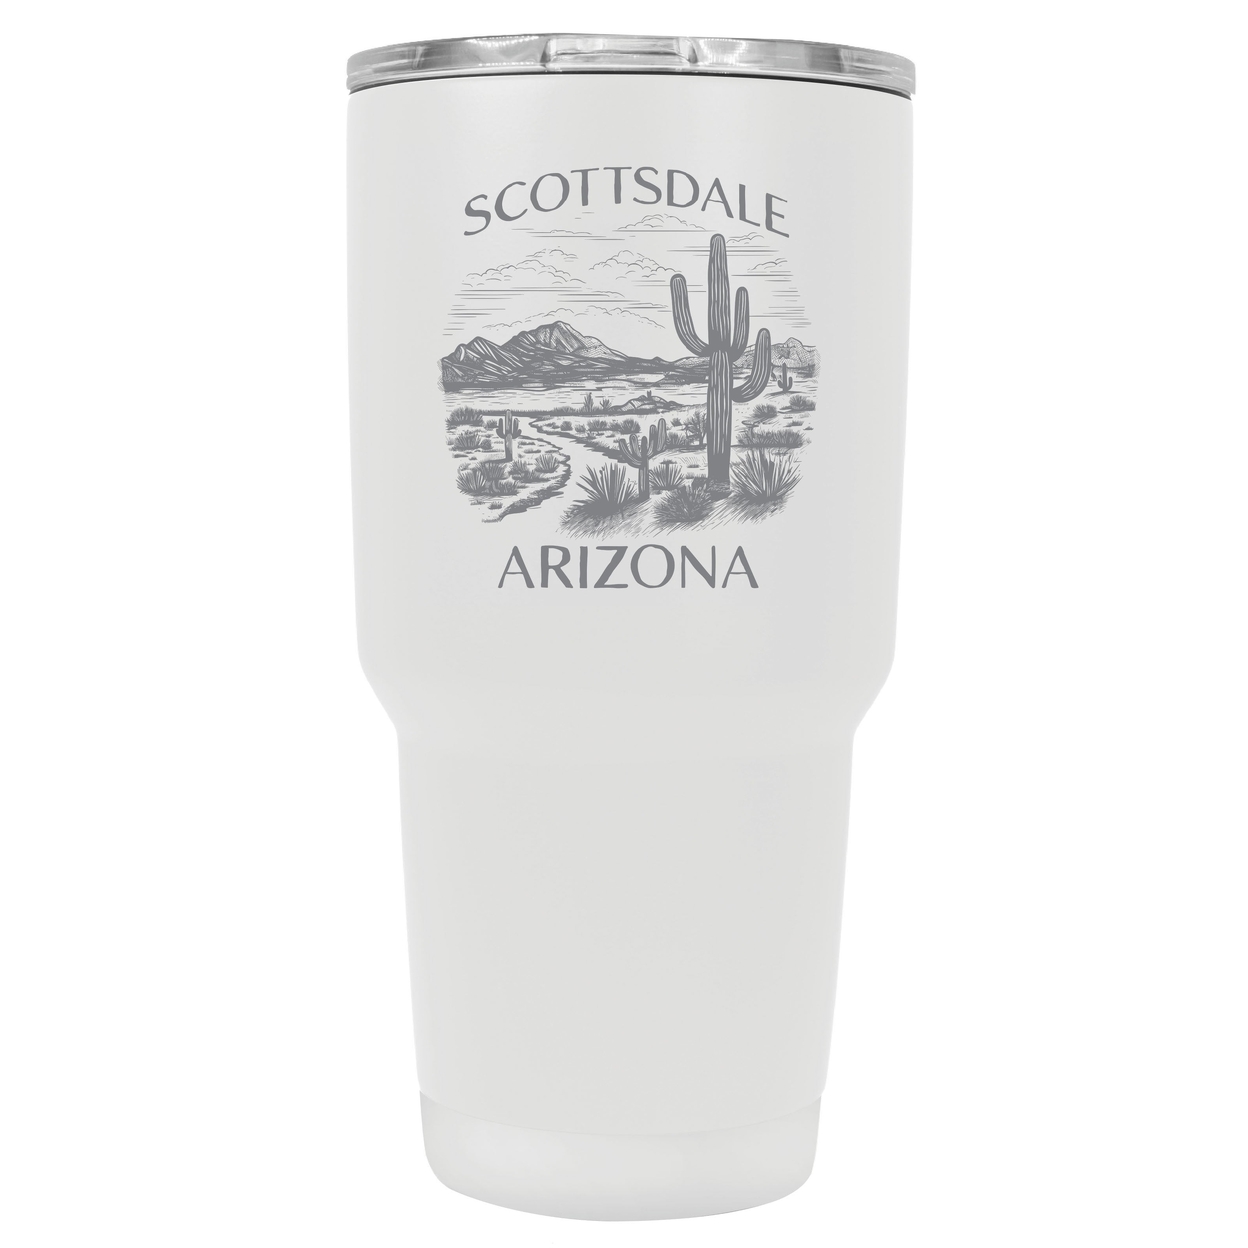 Scottsdale Arizona Souvenir 24 Oz Engraved Insulated Stainless Steel Tumbler - White,,2-Pack